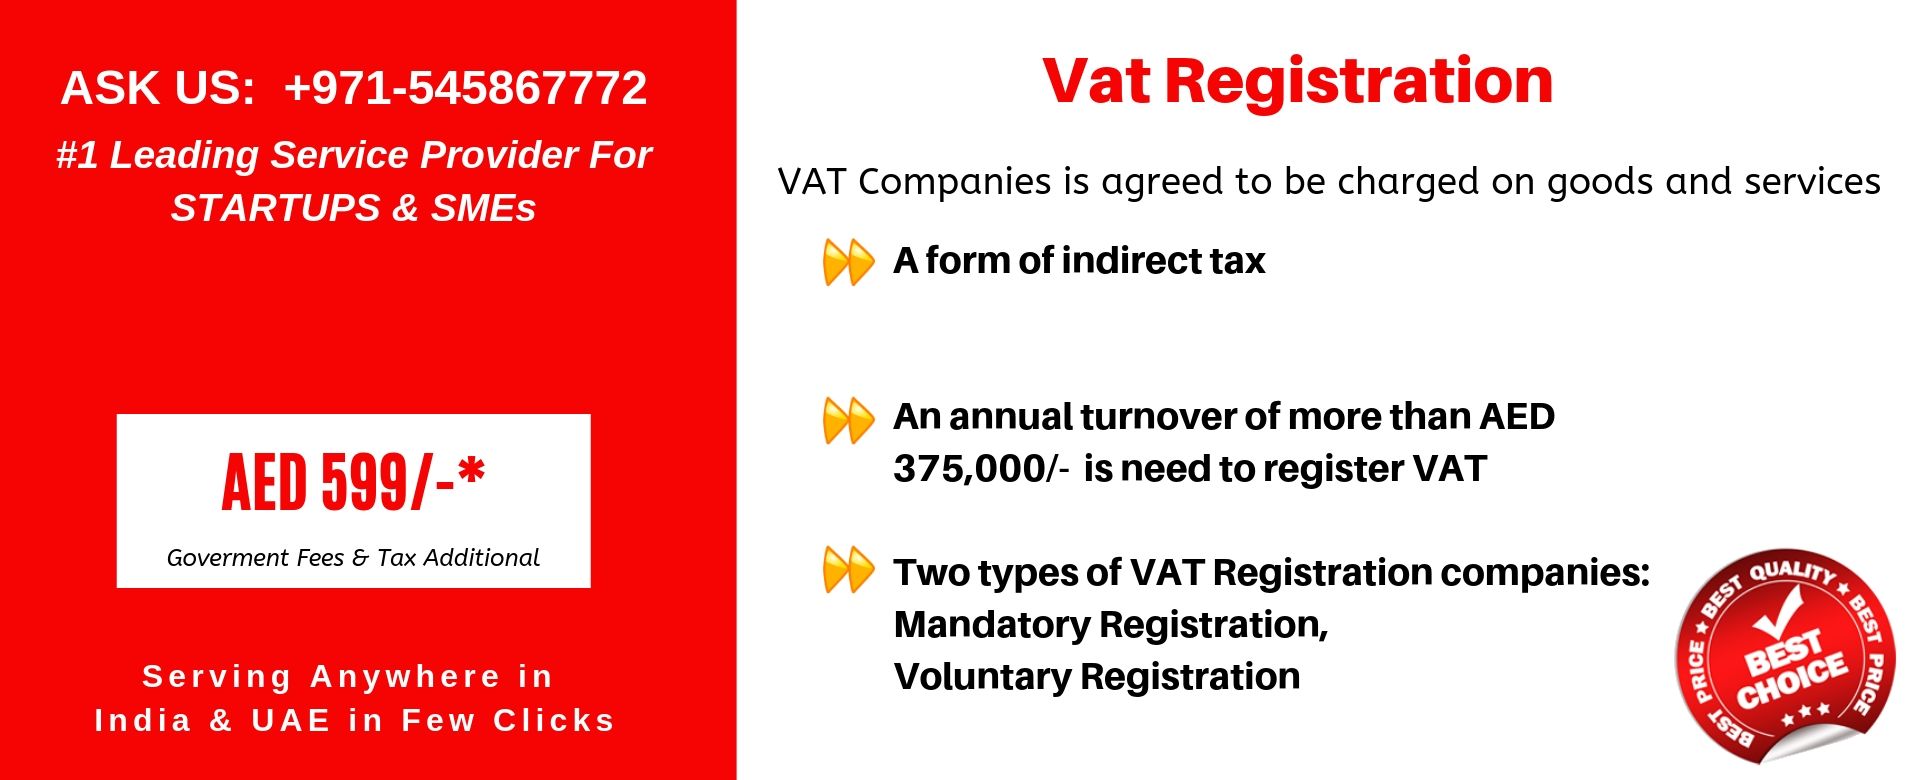 vat registration companies in uae